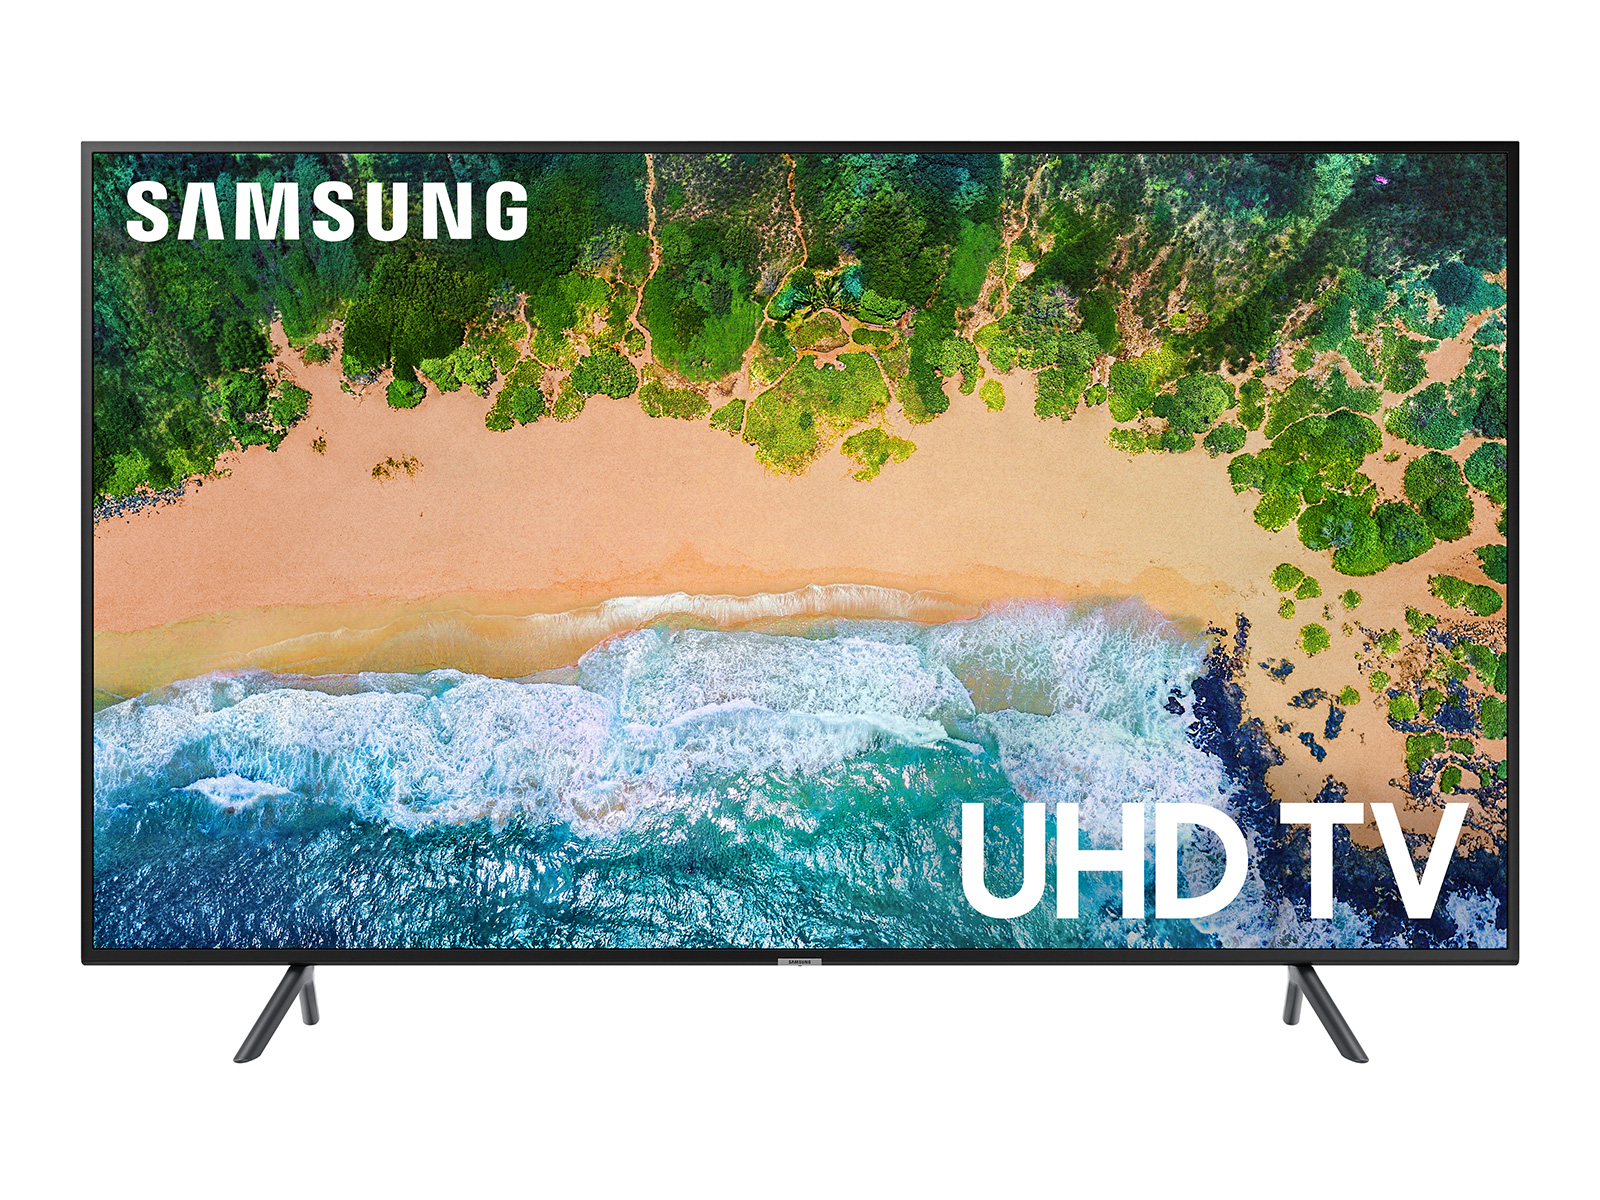 Pelearse abajo visual 65" Class NU6070 Smart 4K UHD TV (2018) TVs - UN65NU6070FXZA | Samsung US